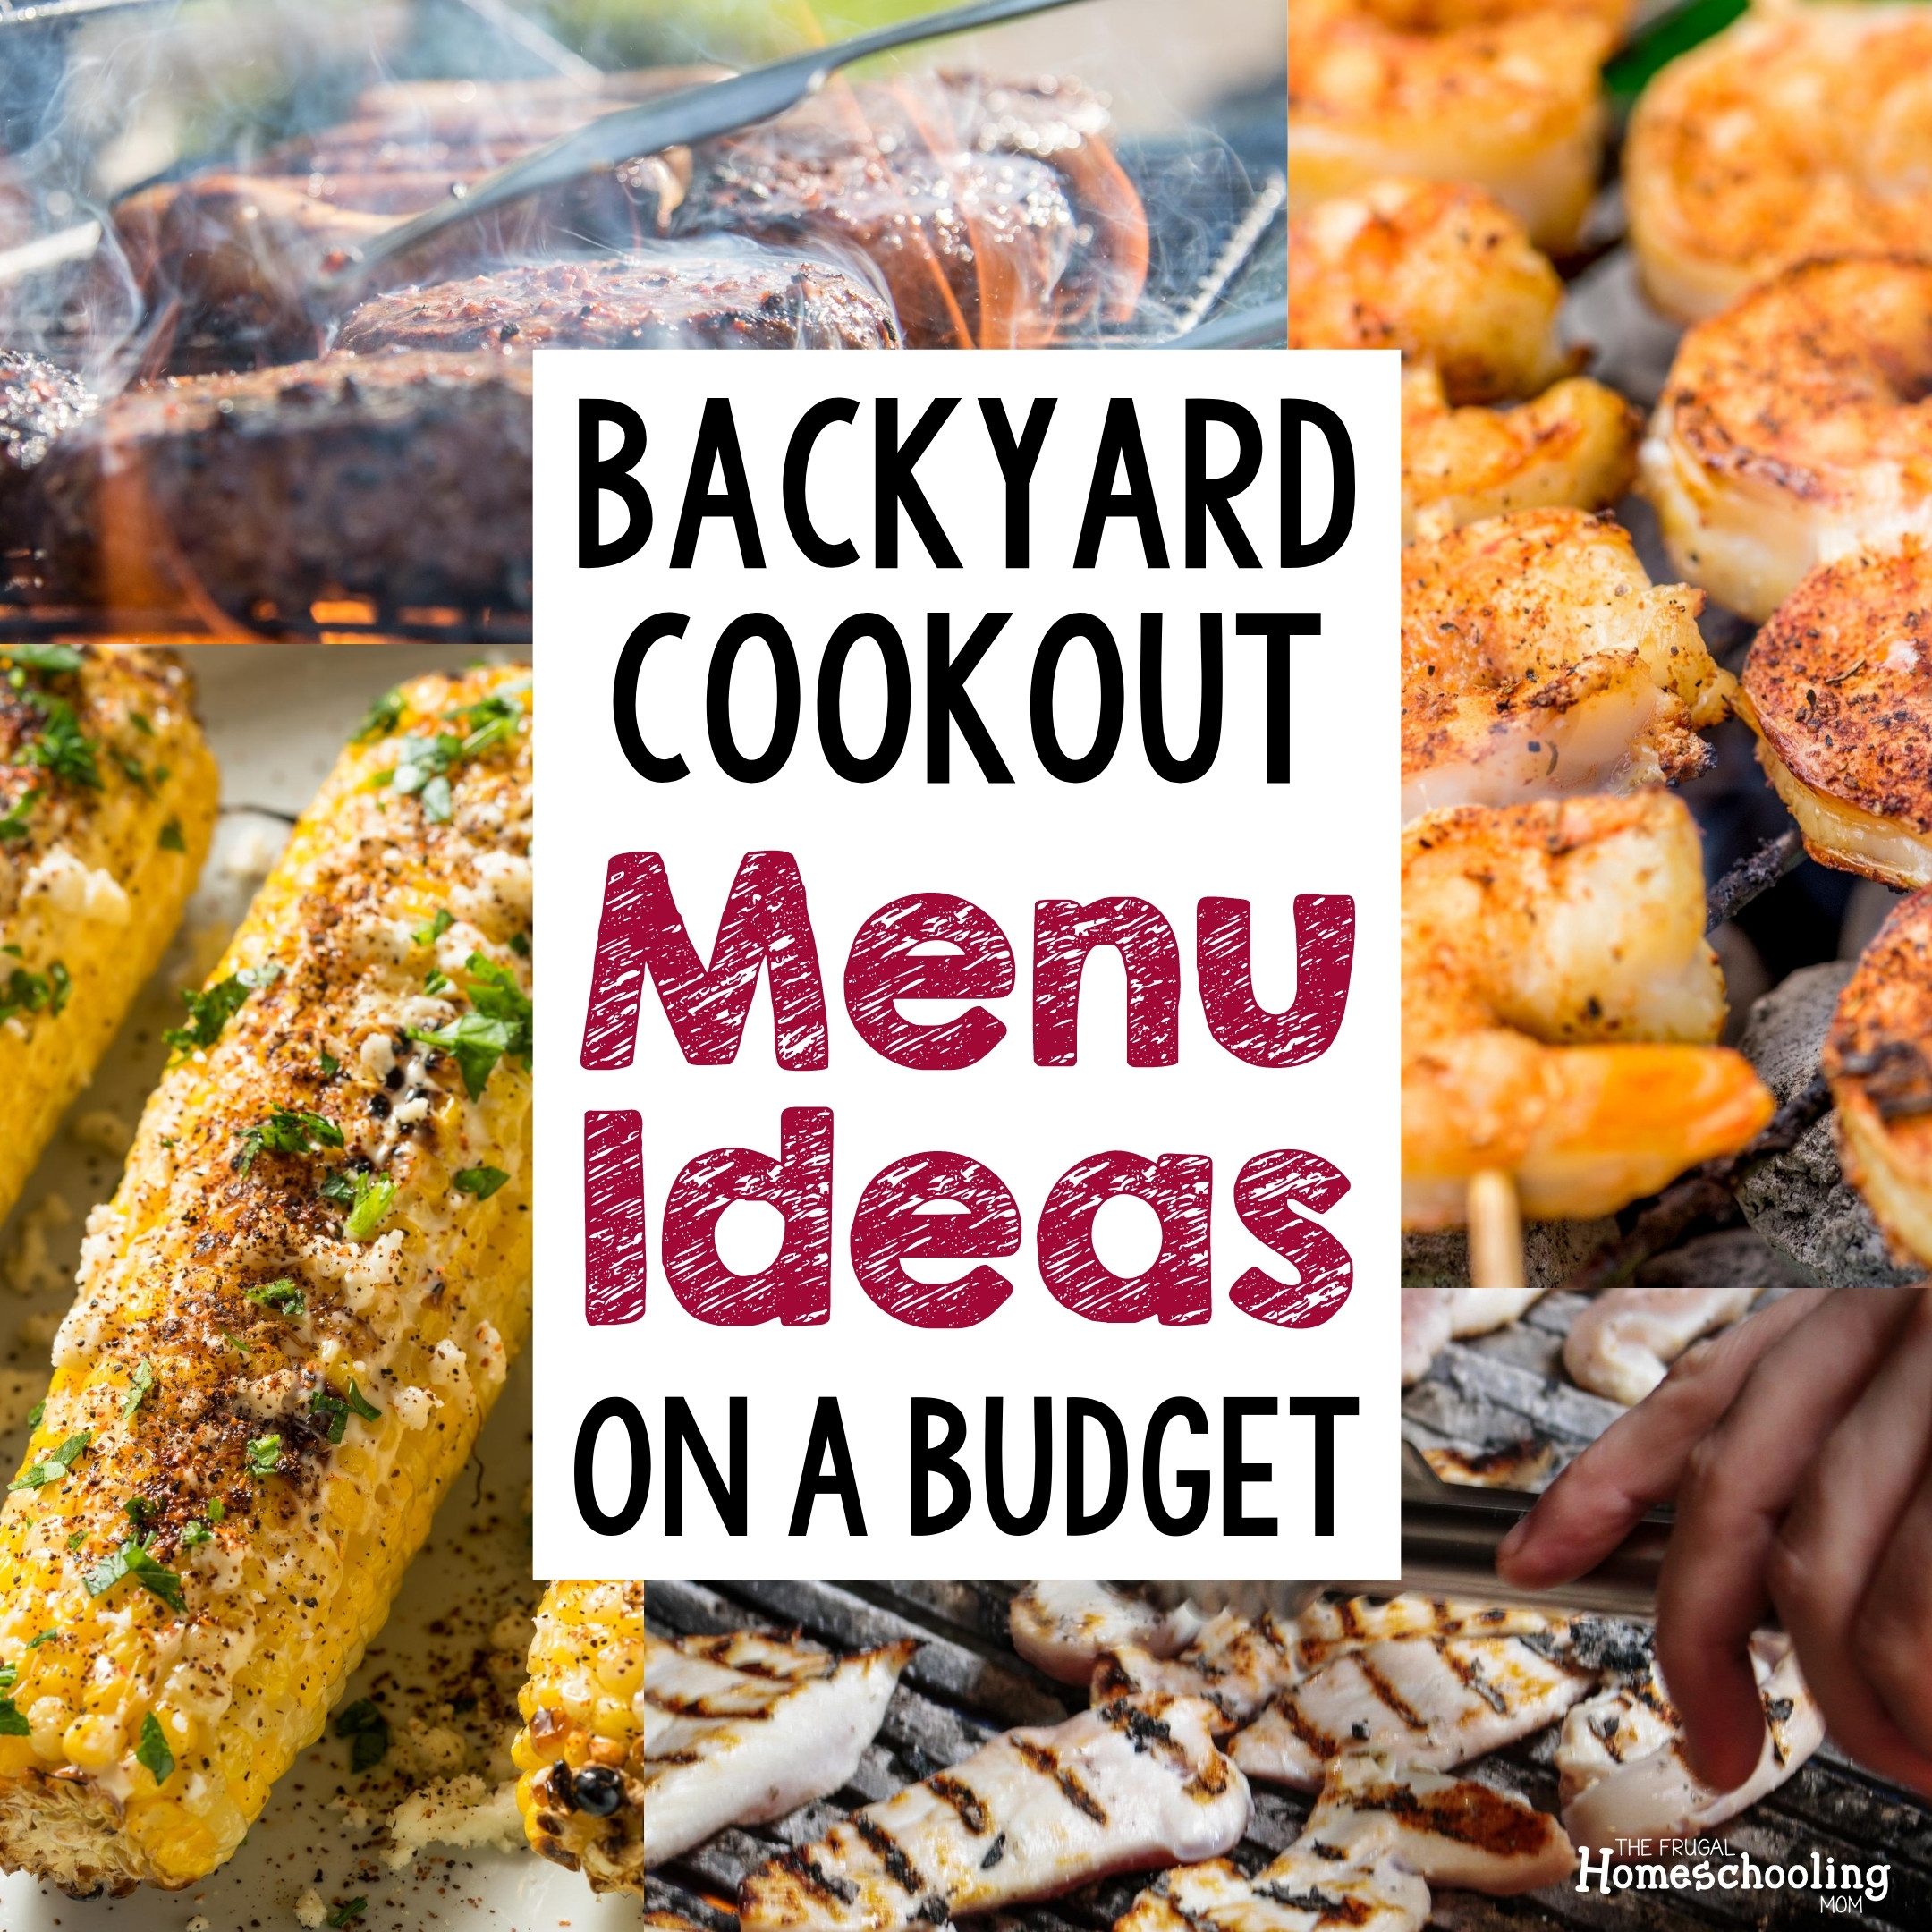 Backyard Cook Out
 Impressive Backyard Cookout Menu Ideas on a Bud